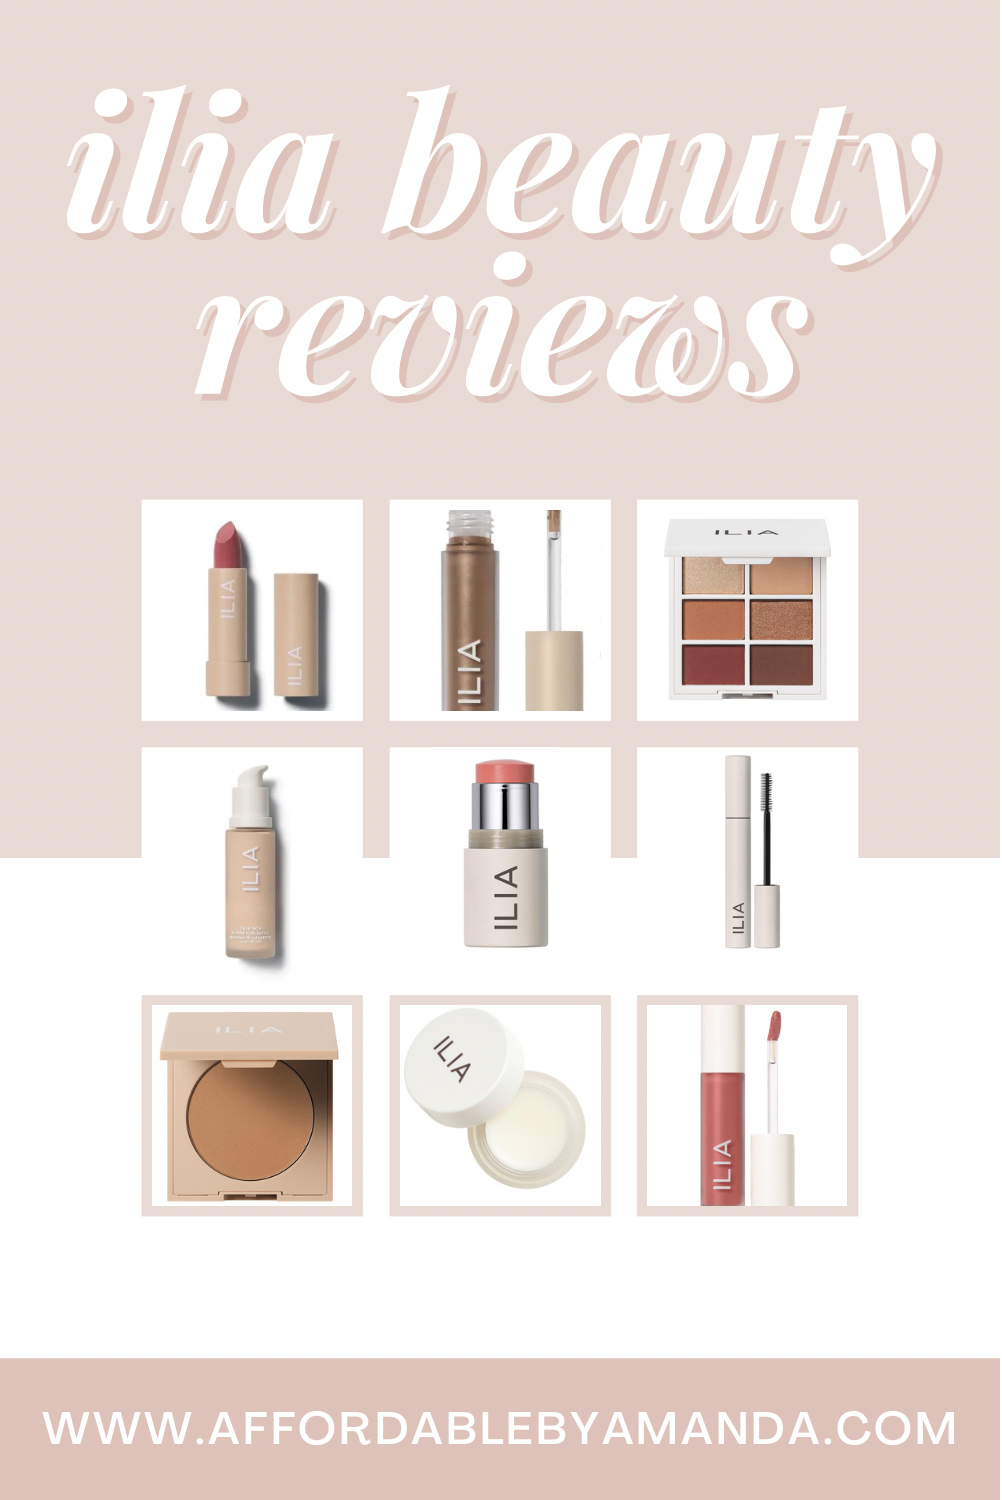 ILIA Beauty Reviews - Best Ilia Beauty Products 2022 - ILIA Beauty Clean Makeup Reviews - Affordable by Amanda Beauty Reviews